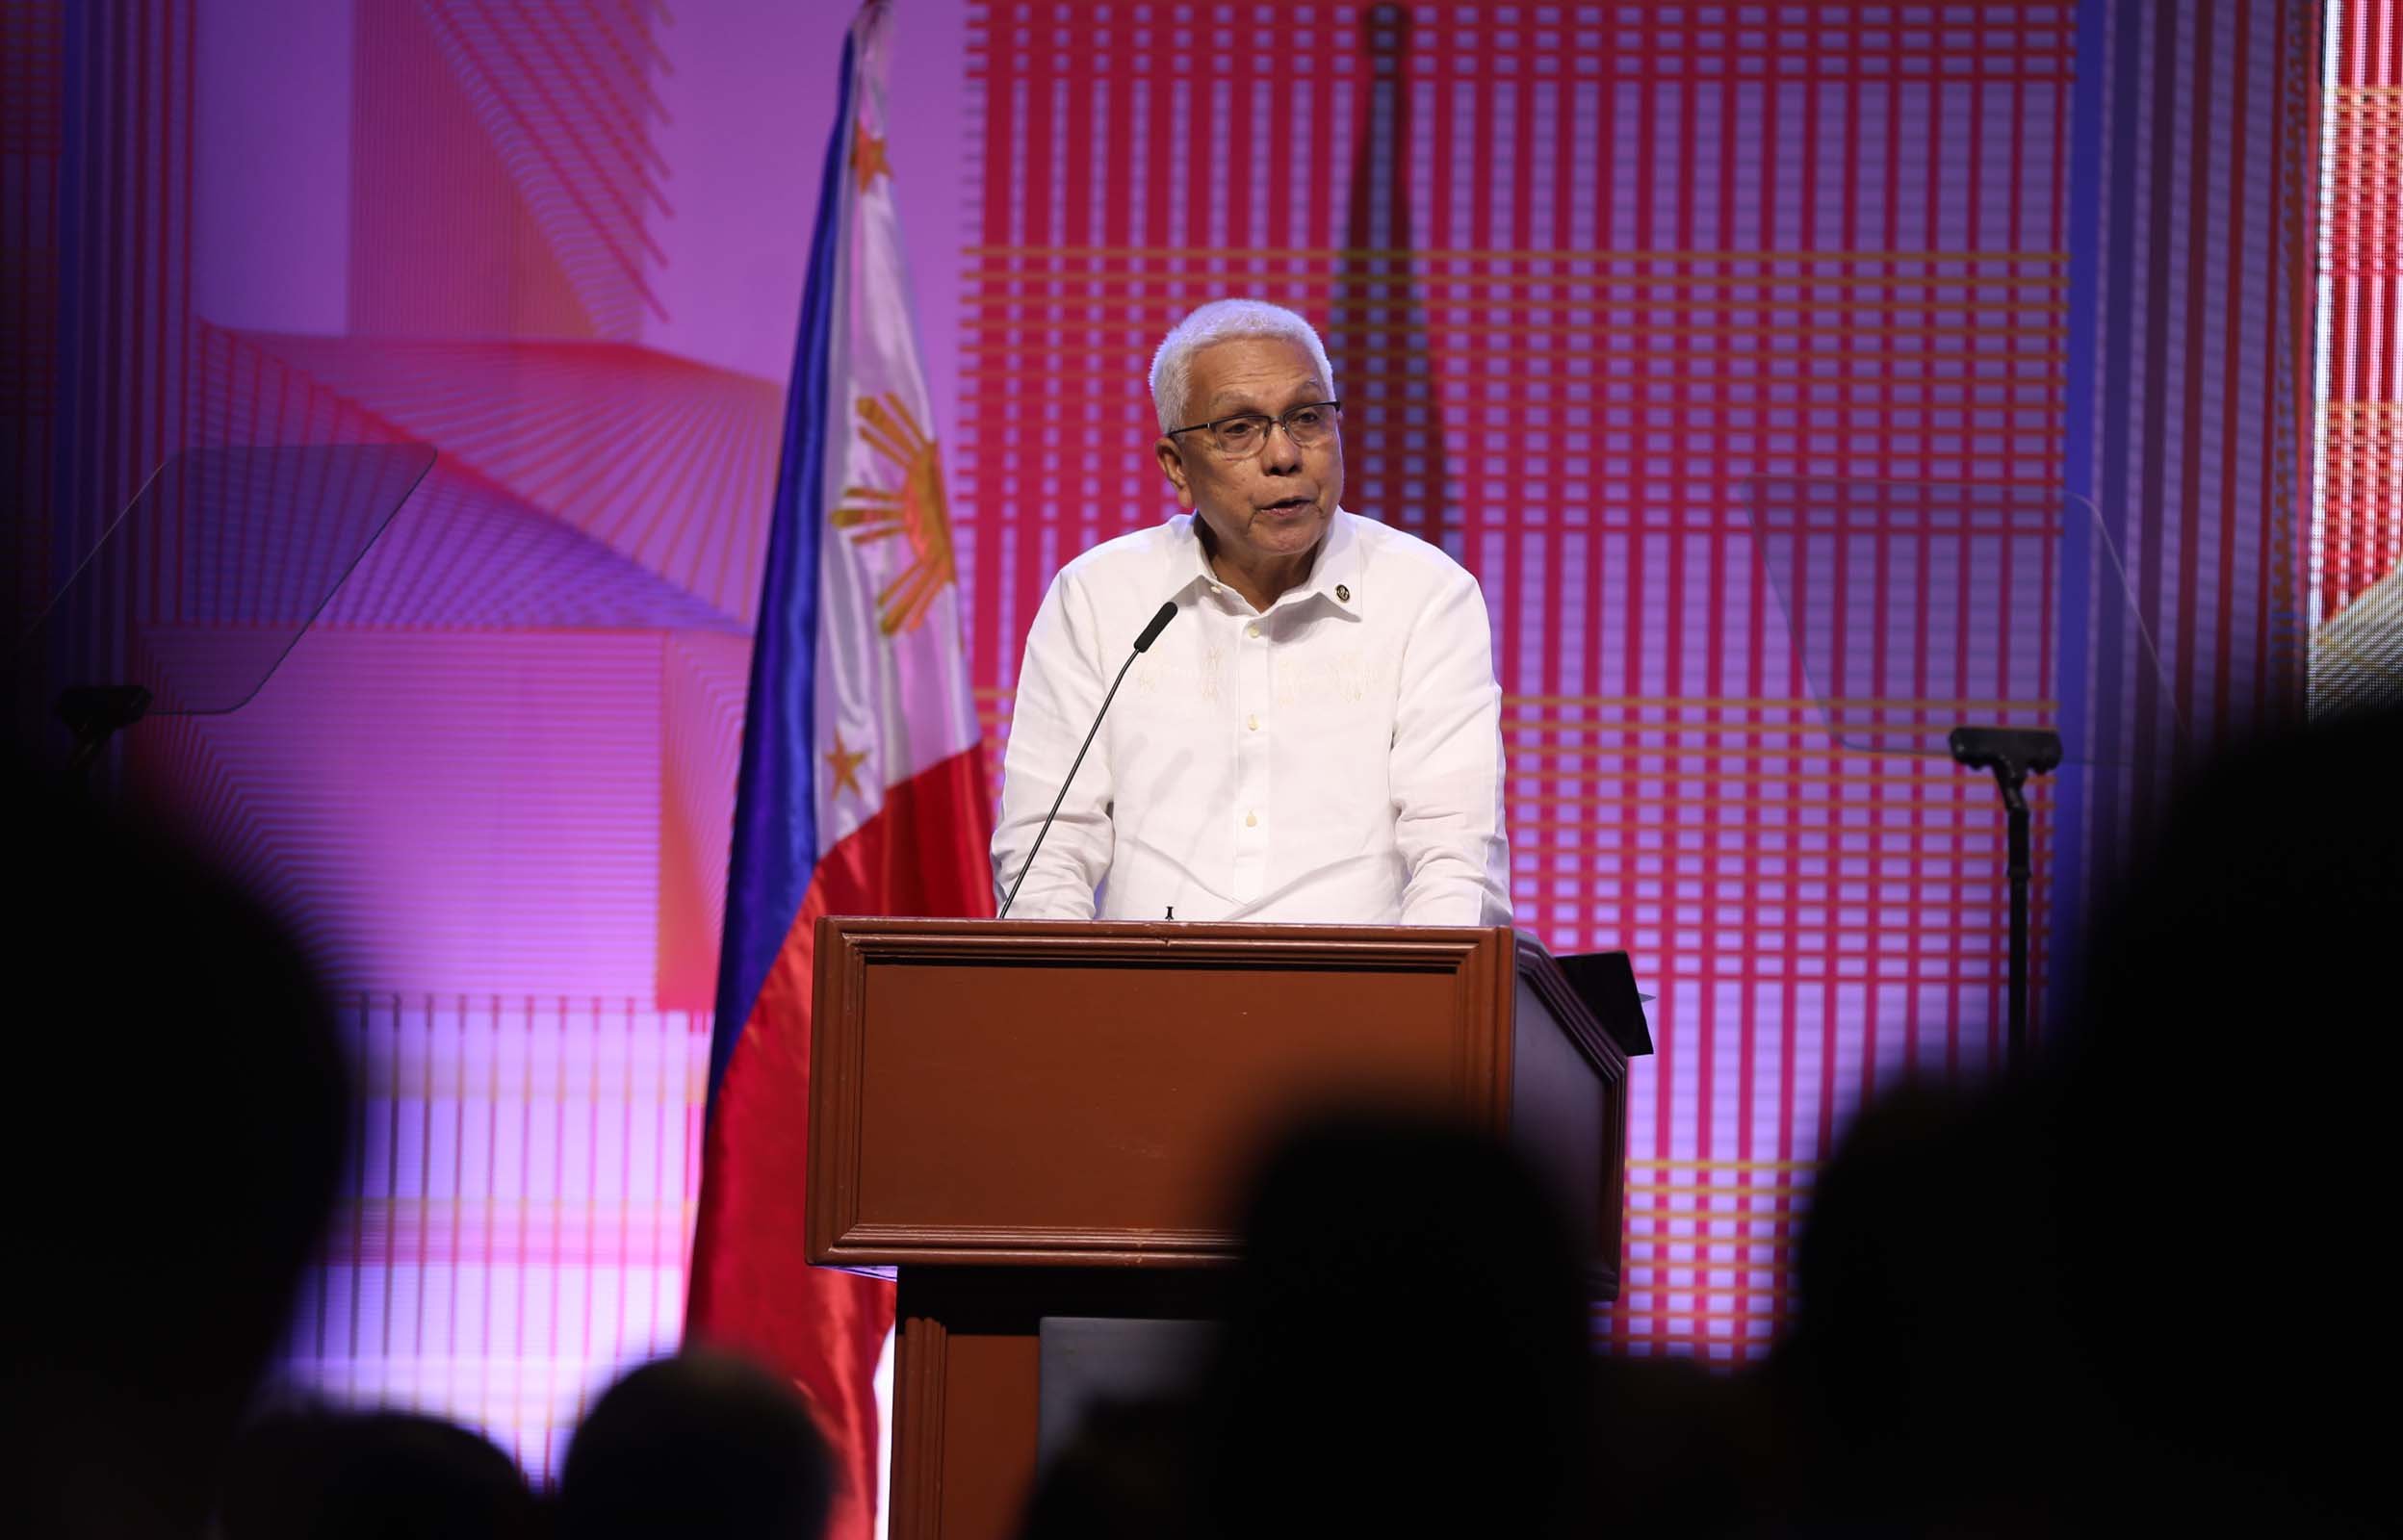 Cabinet Secretary Evasco at launching of Philippine Development Plan